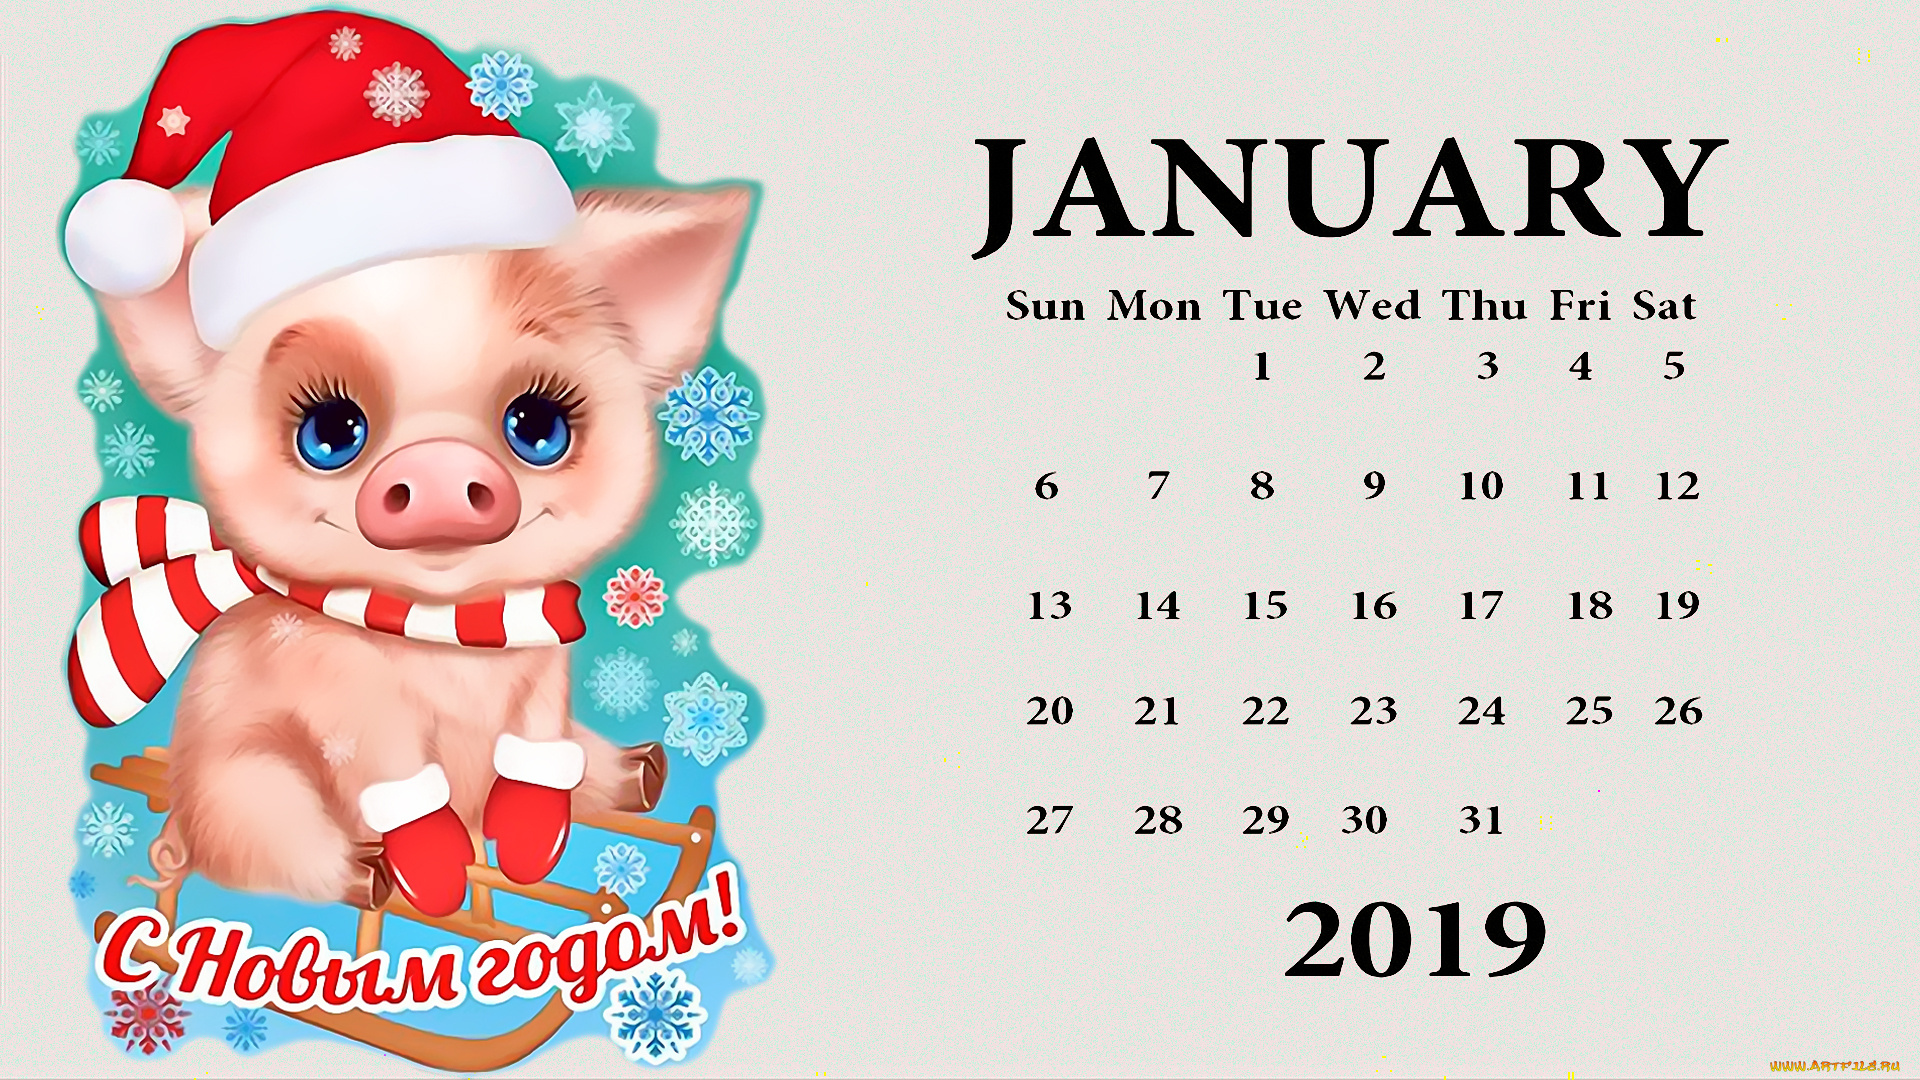 календари, праздники, , салюты, поросенок, снежинка, шапка, свинья, санки